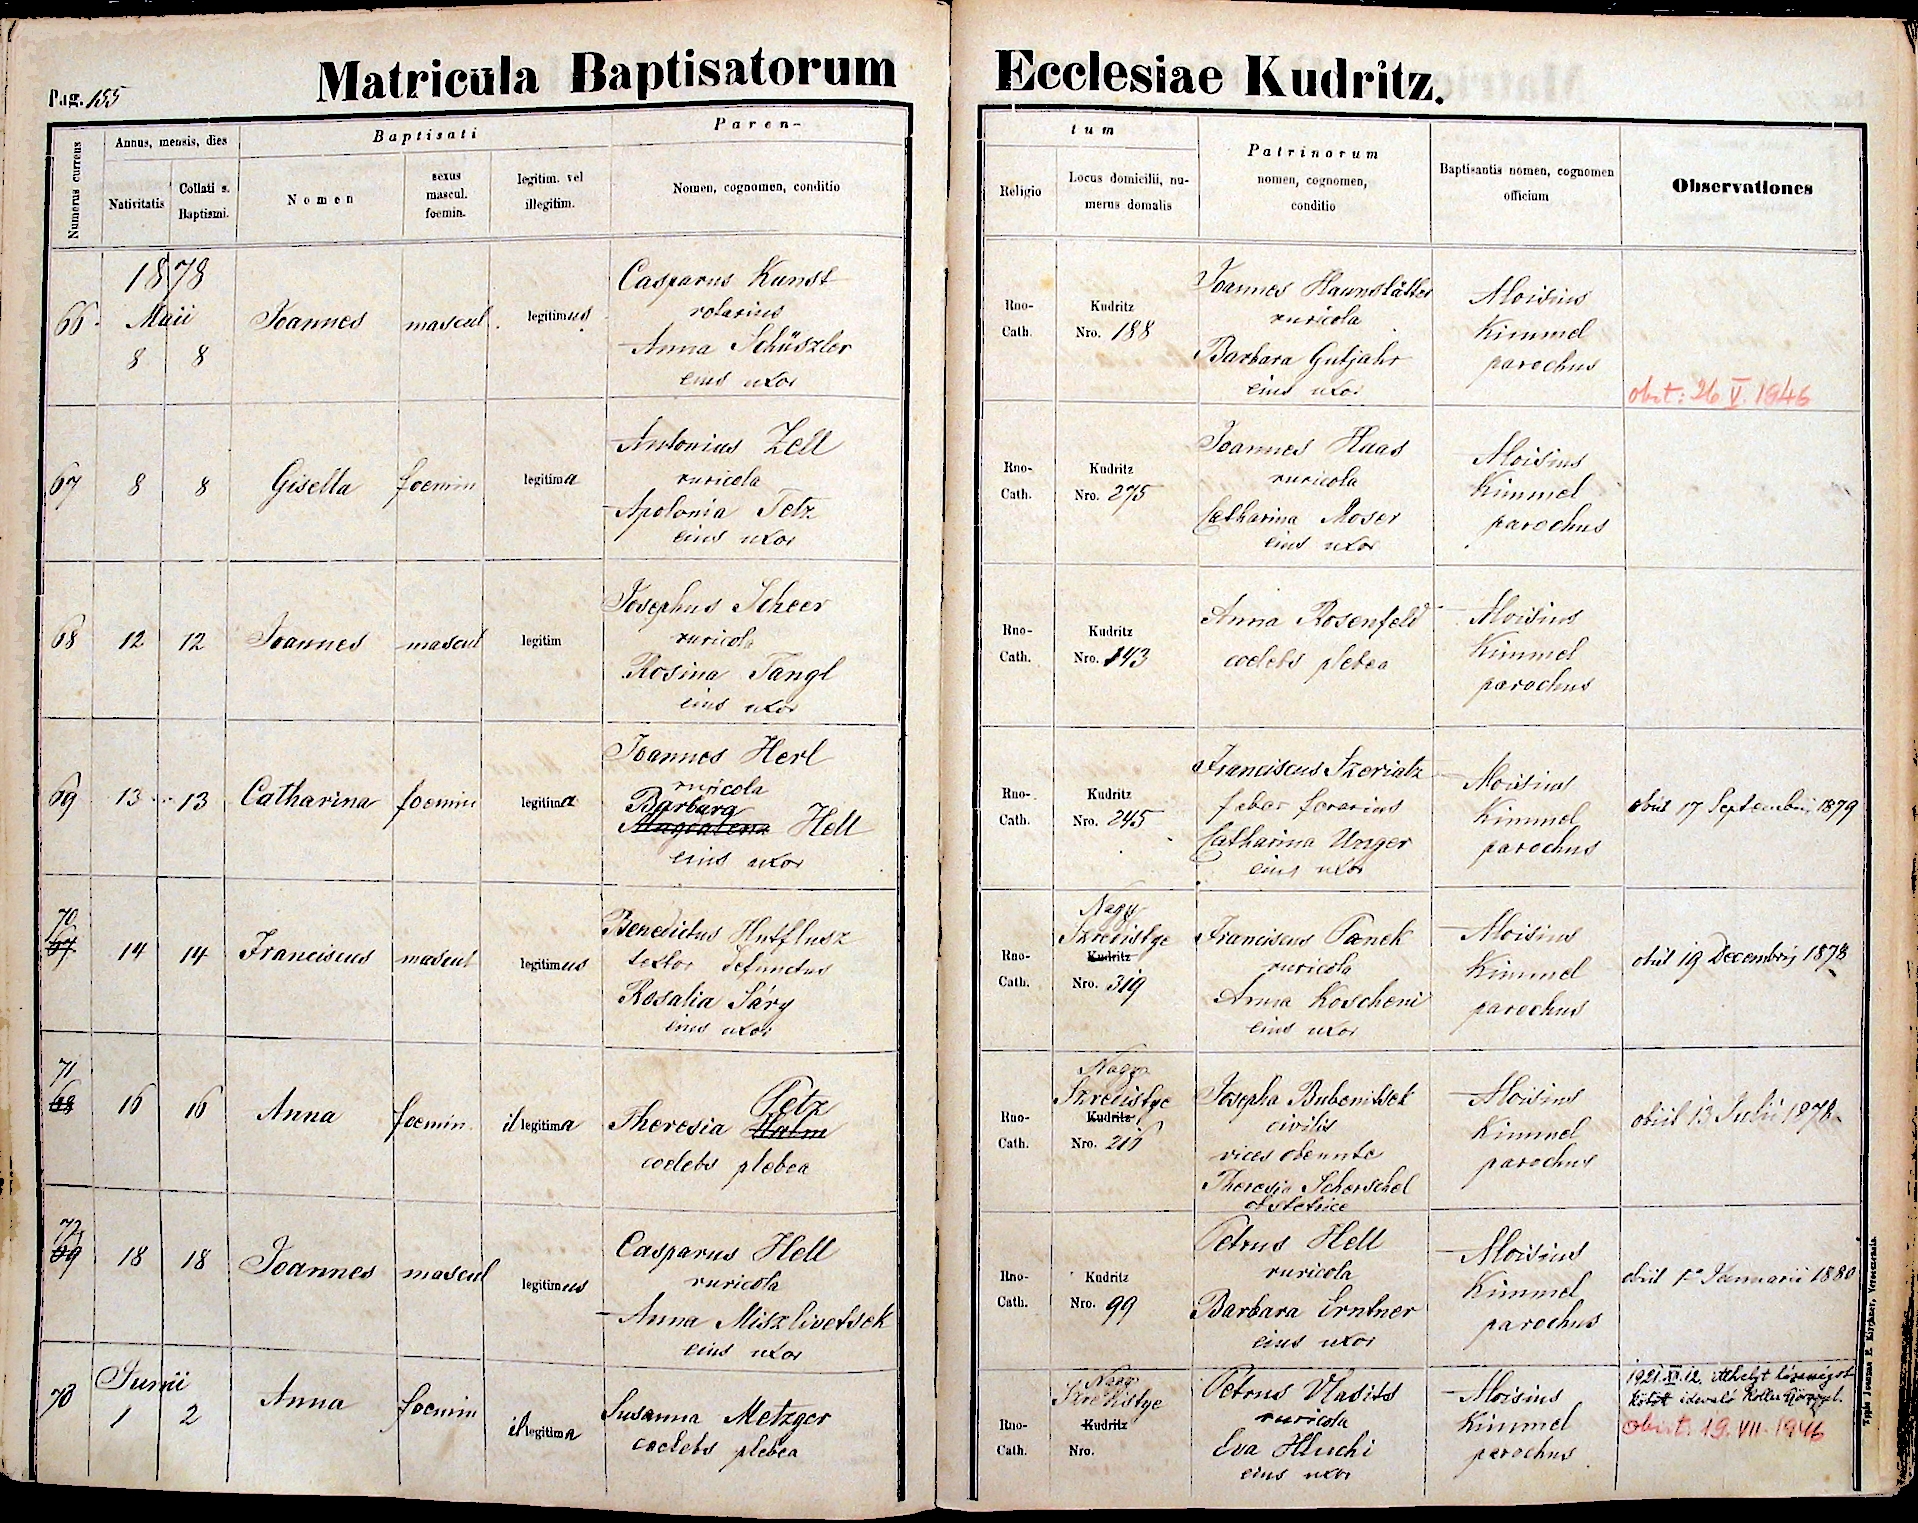 images/church_records/BIRTHS/1870-1879B/1878/155